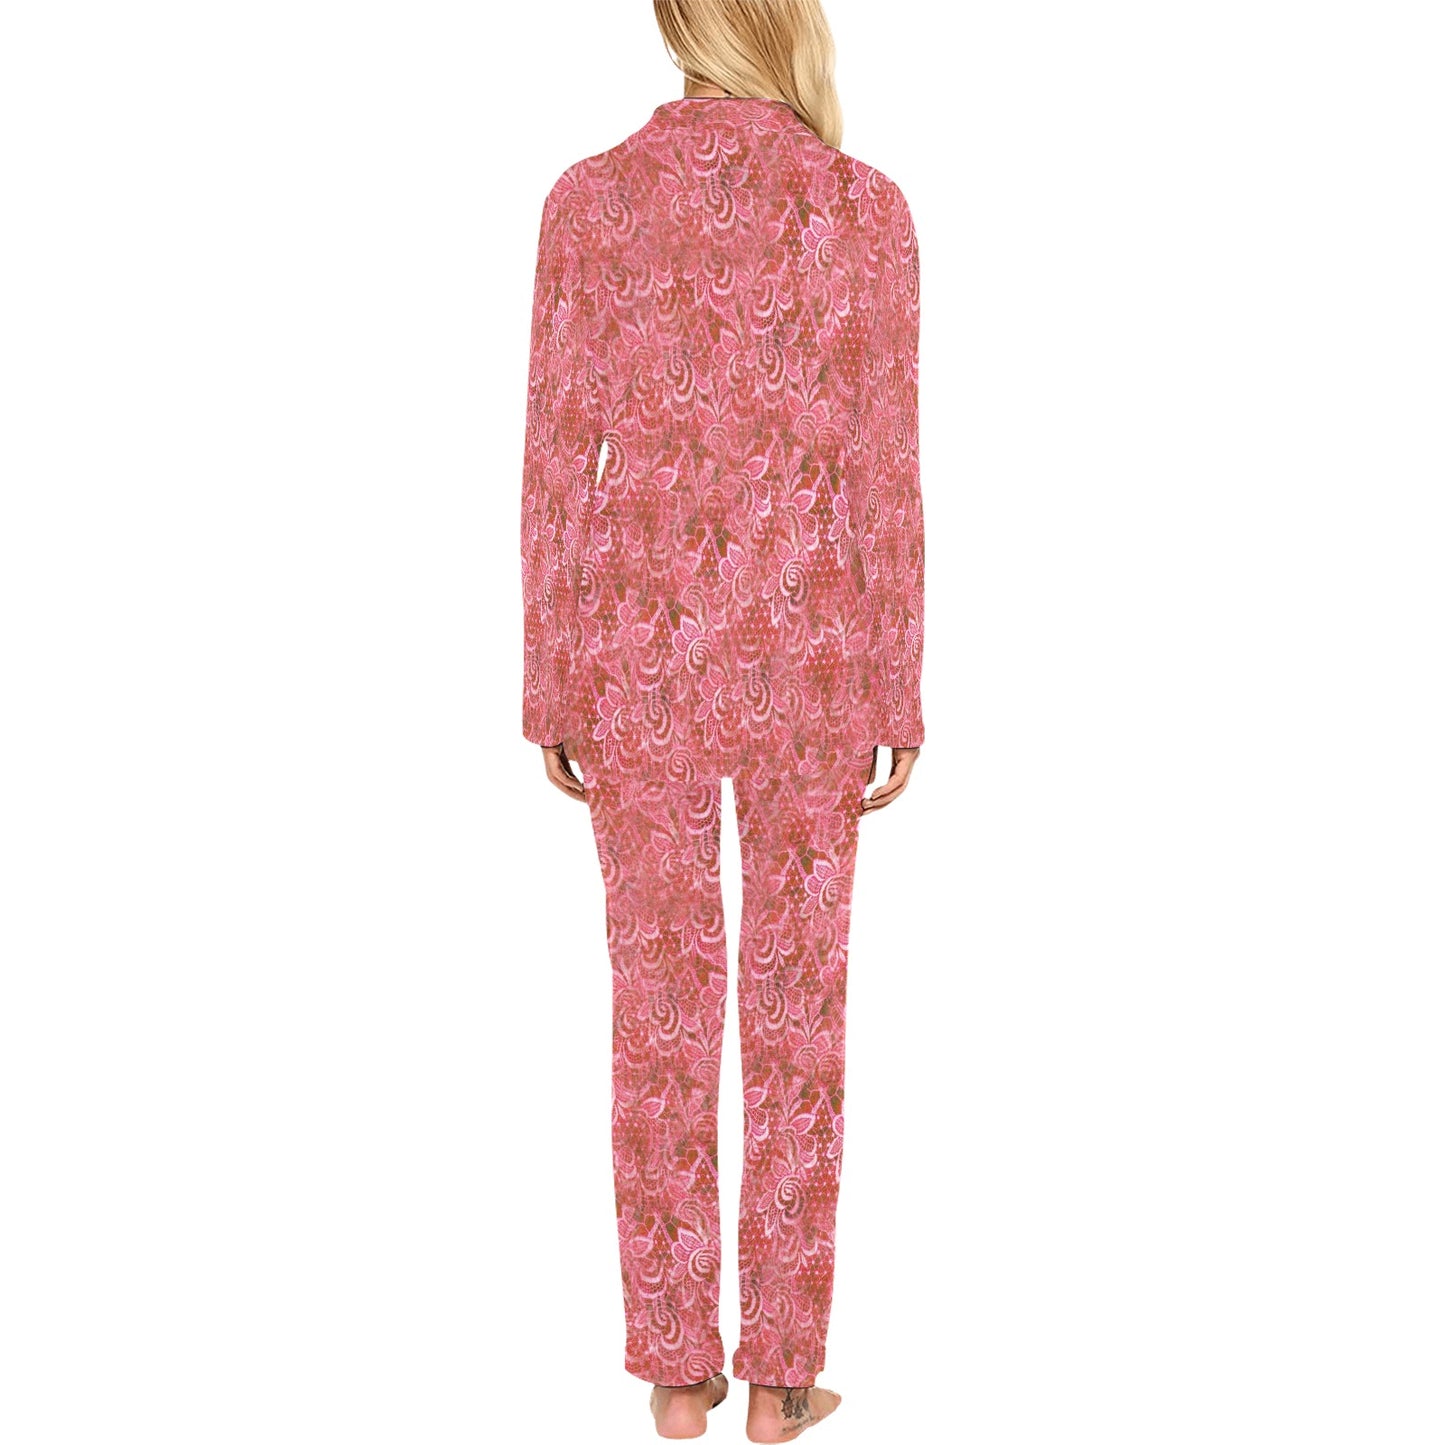 Victorian printed lace pajama set, design 33 Women's Long Pajama Set (Sets 02)